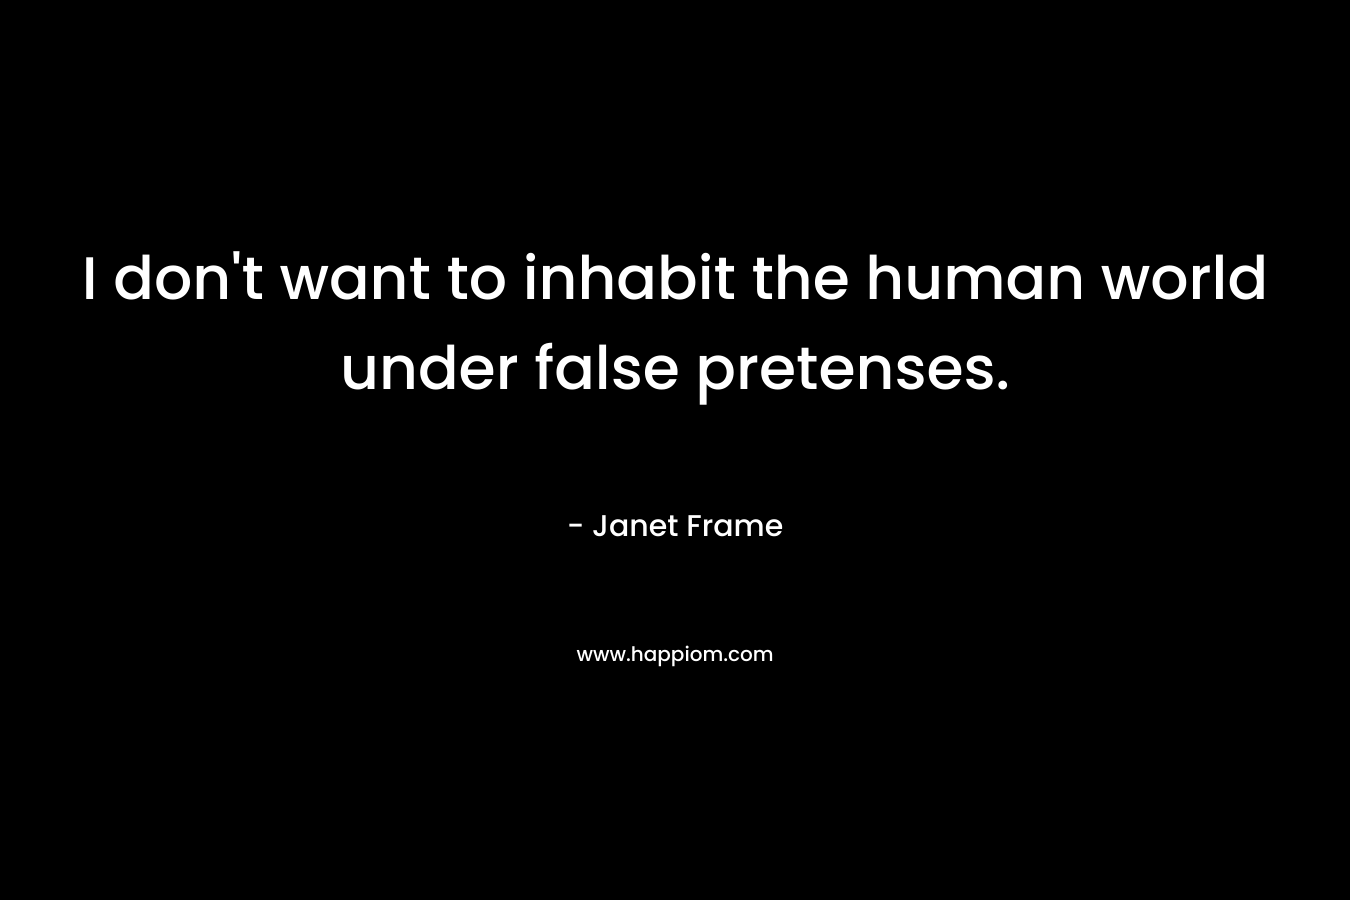 I don't want to inhabit the human world under false pretenses.